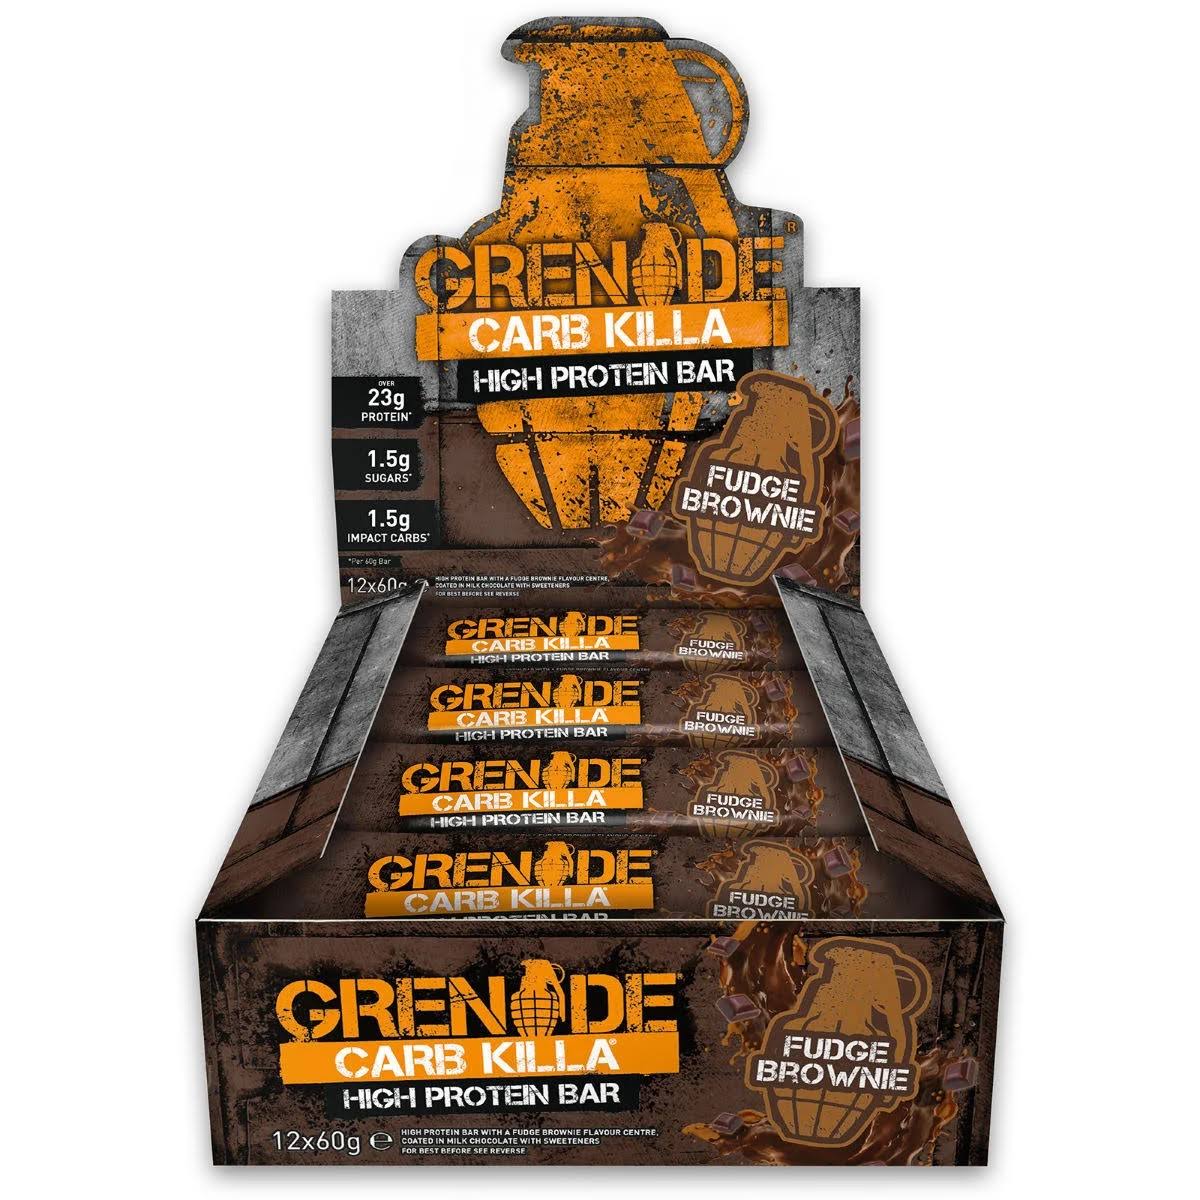 Grenade - Carb Killa, Fudge Brownie - 12 Bars